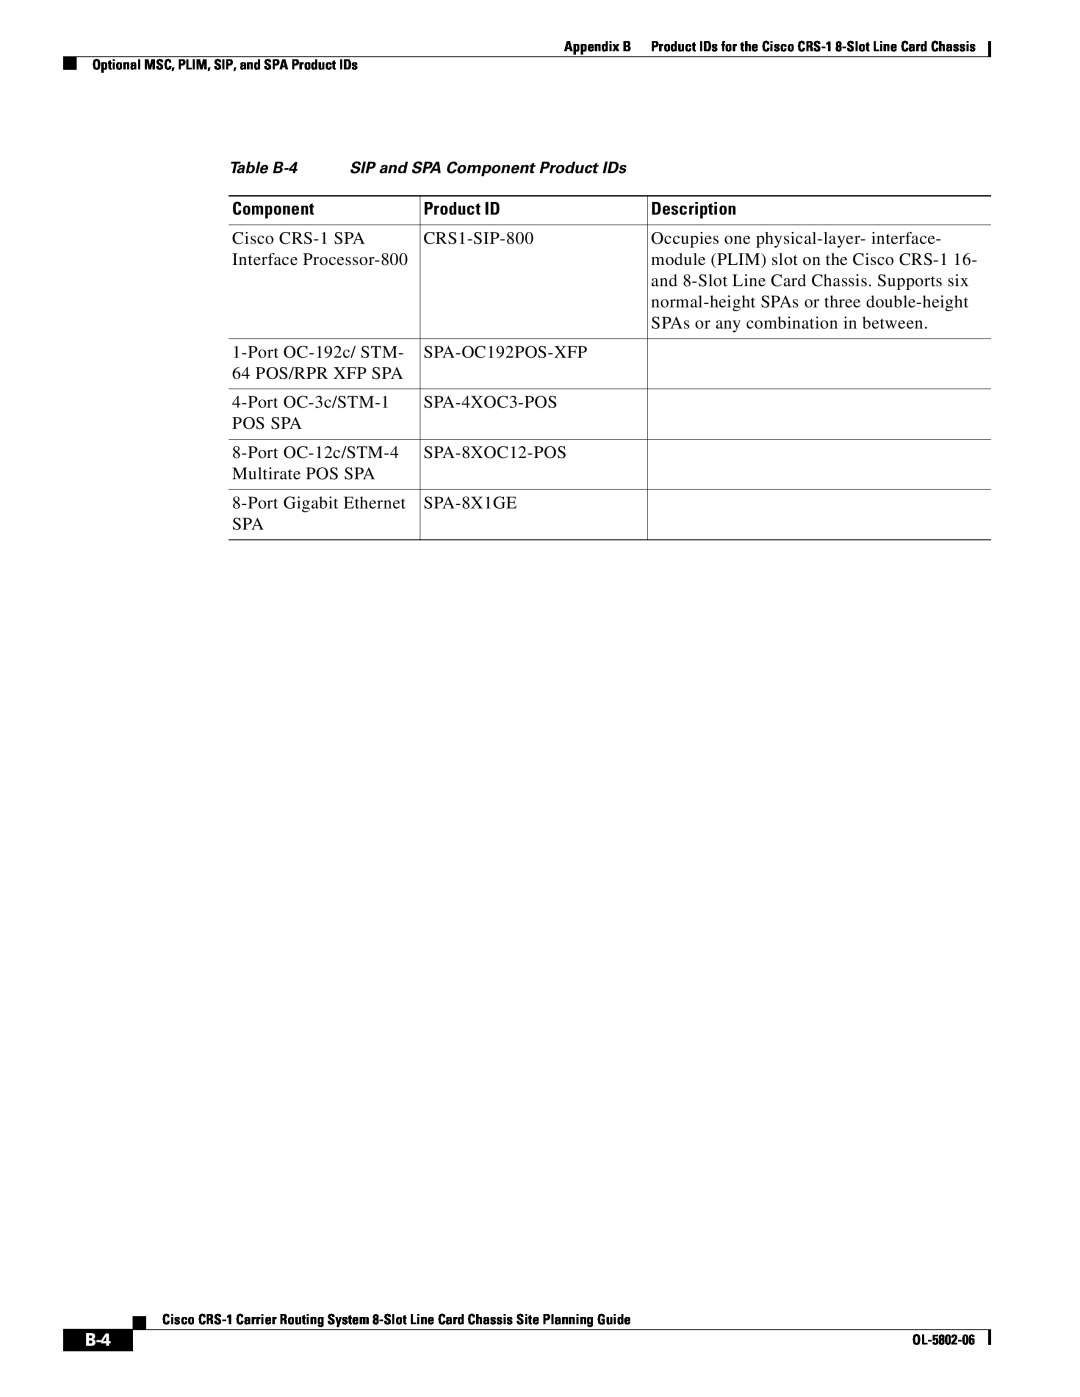 Cisco Systems CRS-1 manual Component, Product ID, Description 